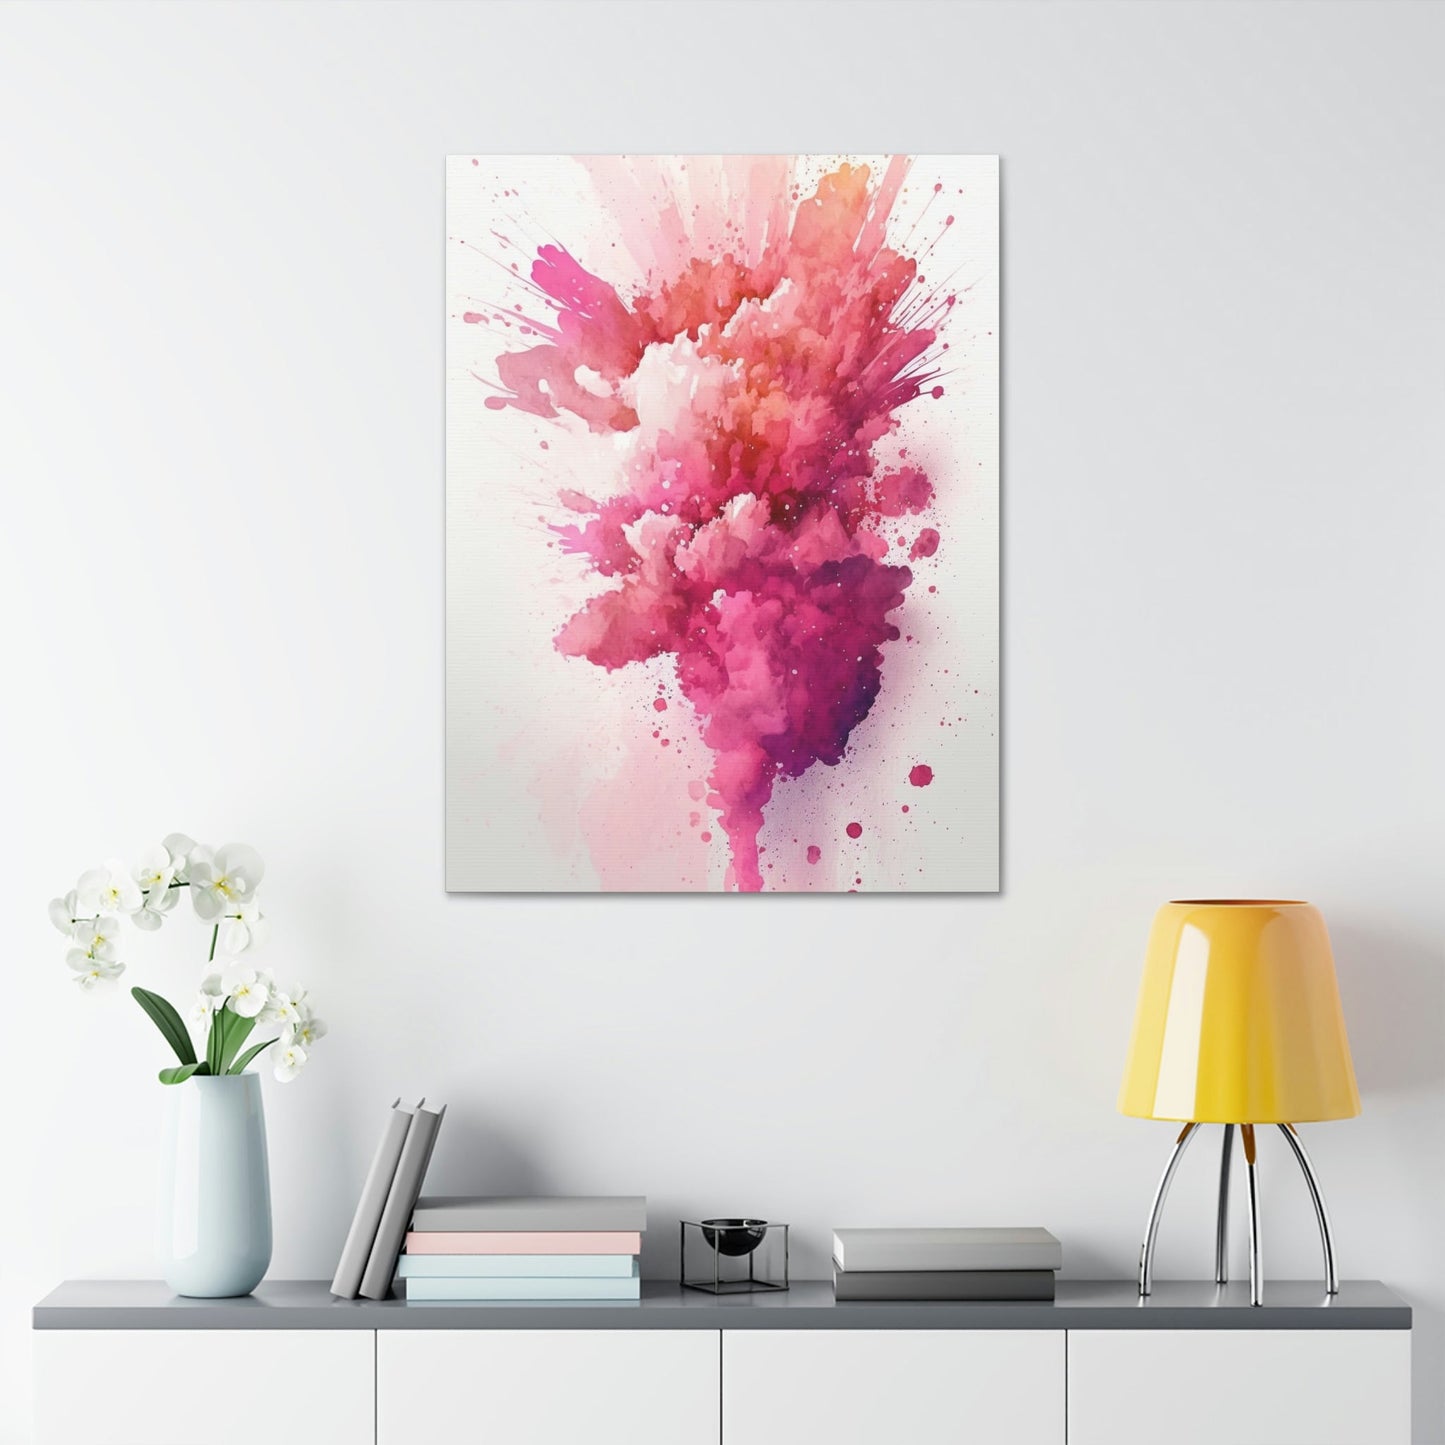 Glowing Pink: Natural Canvas Wall Art of Abstract Artworks in Luminous Pink Shades